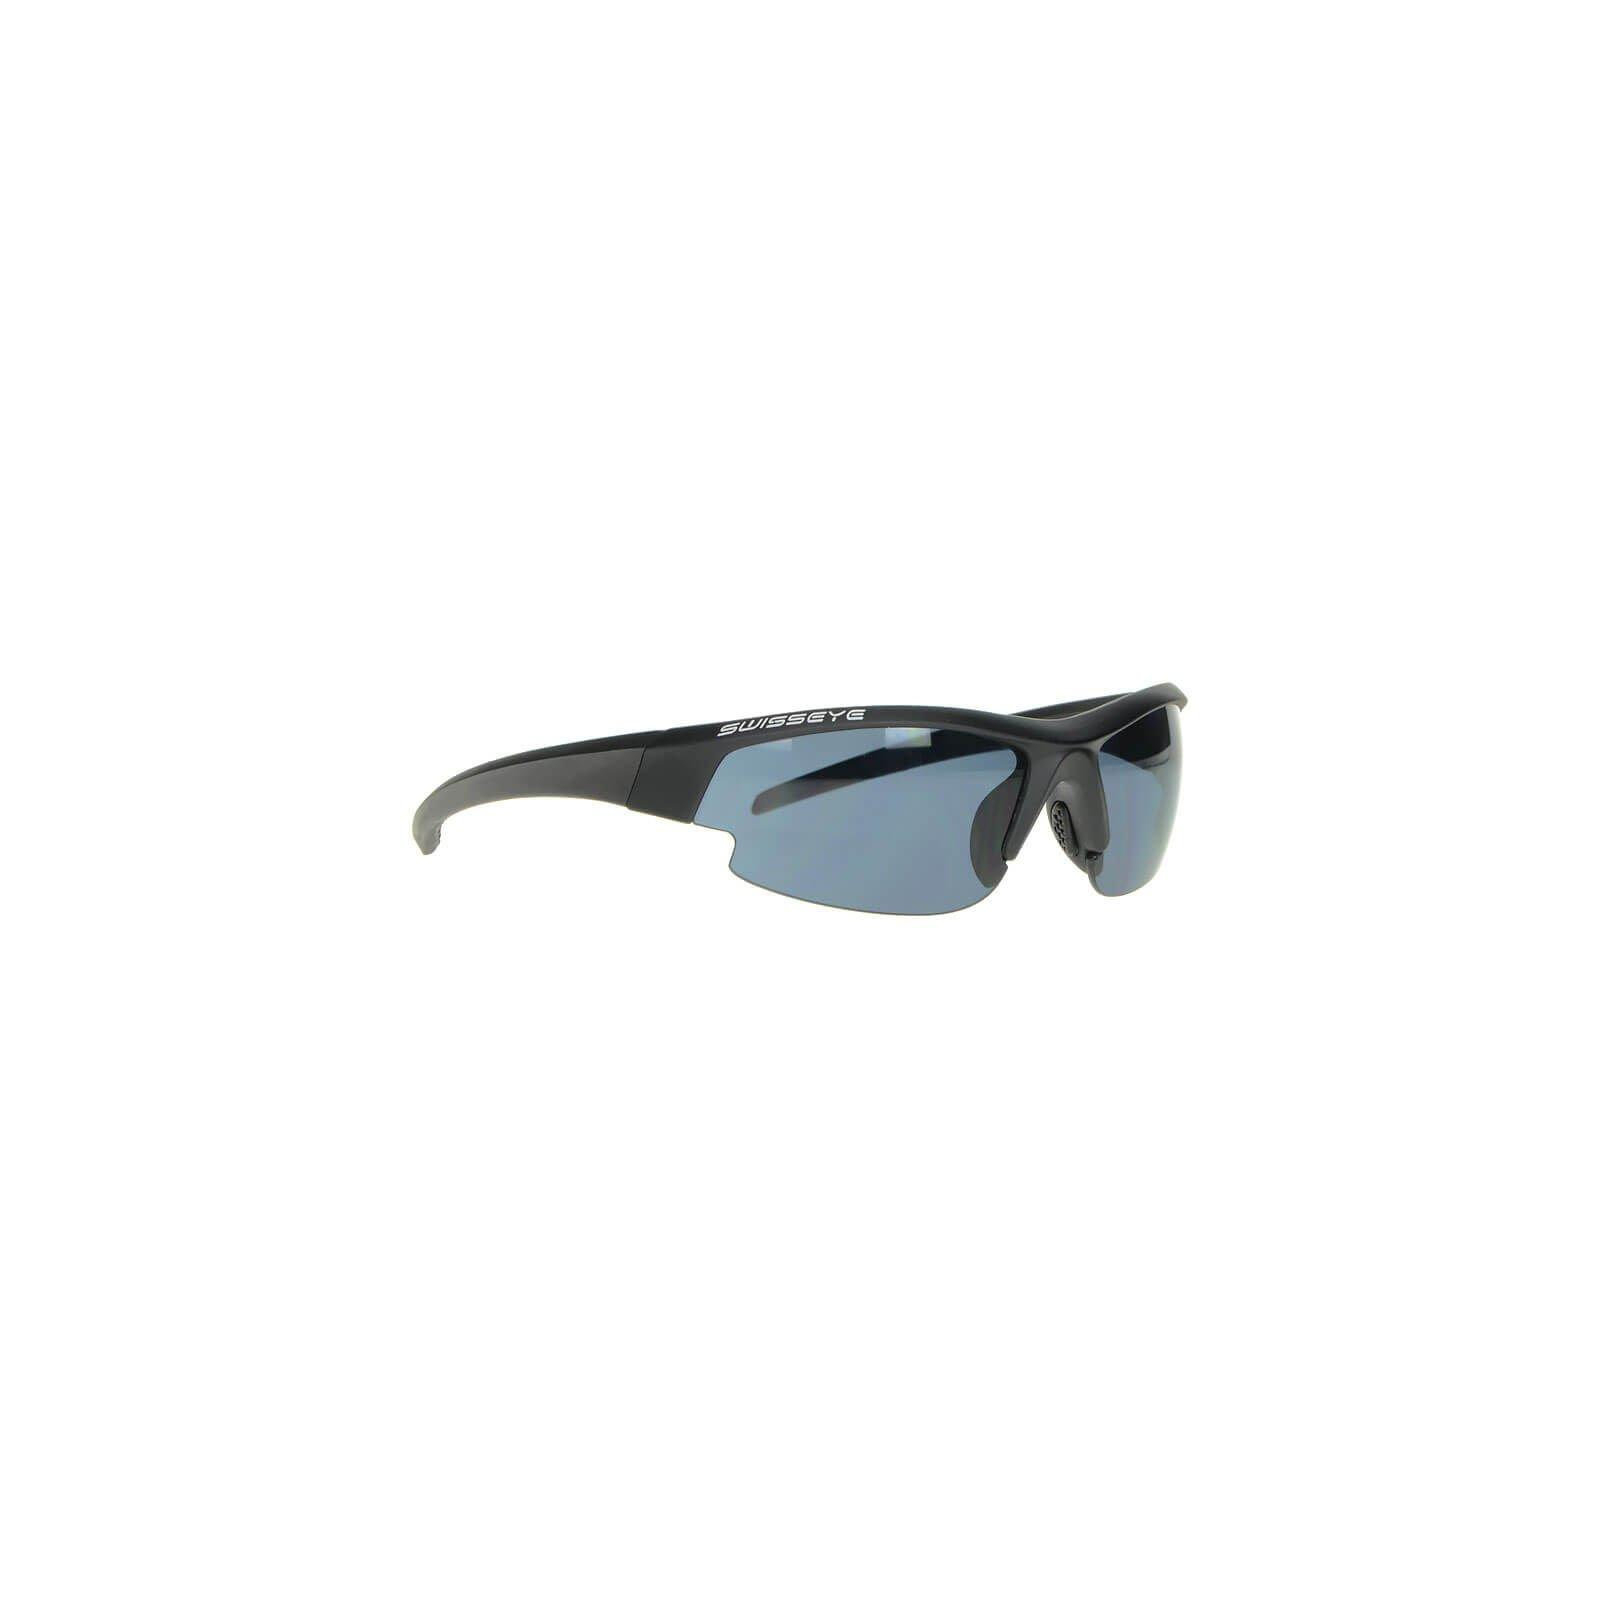 Тактичні окуляри Swiss Eye Evolution баллист., 3 комплекта сменных линз, футляр, черный (40271)